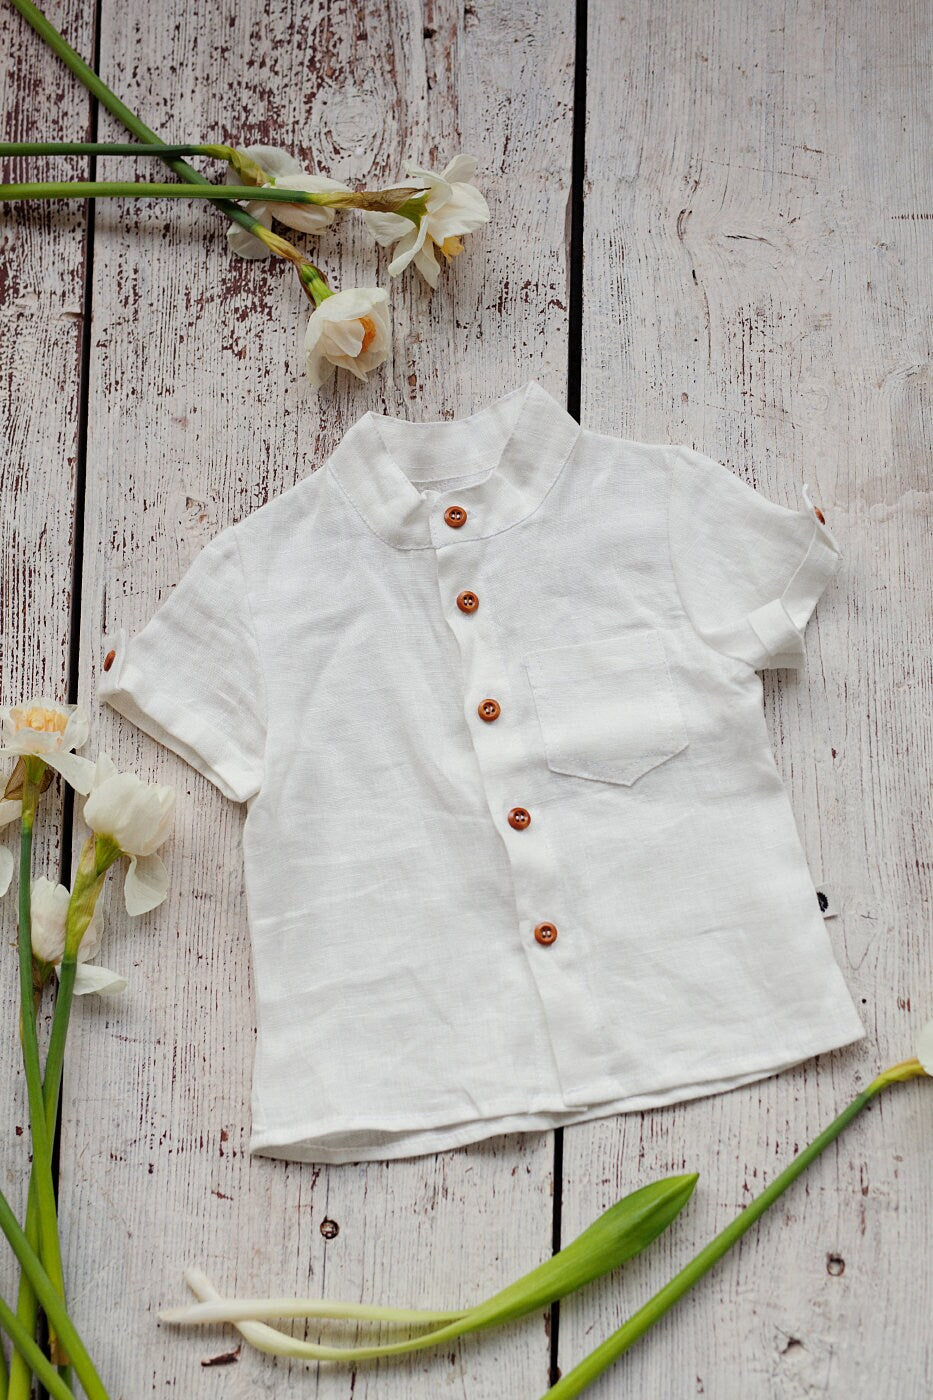 Boy‘s linen wedding or christening suit: set of linen crop pants, white linen shirt